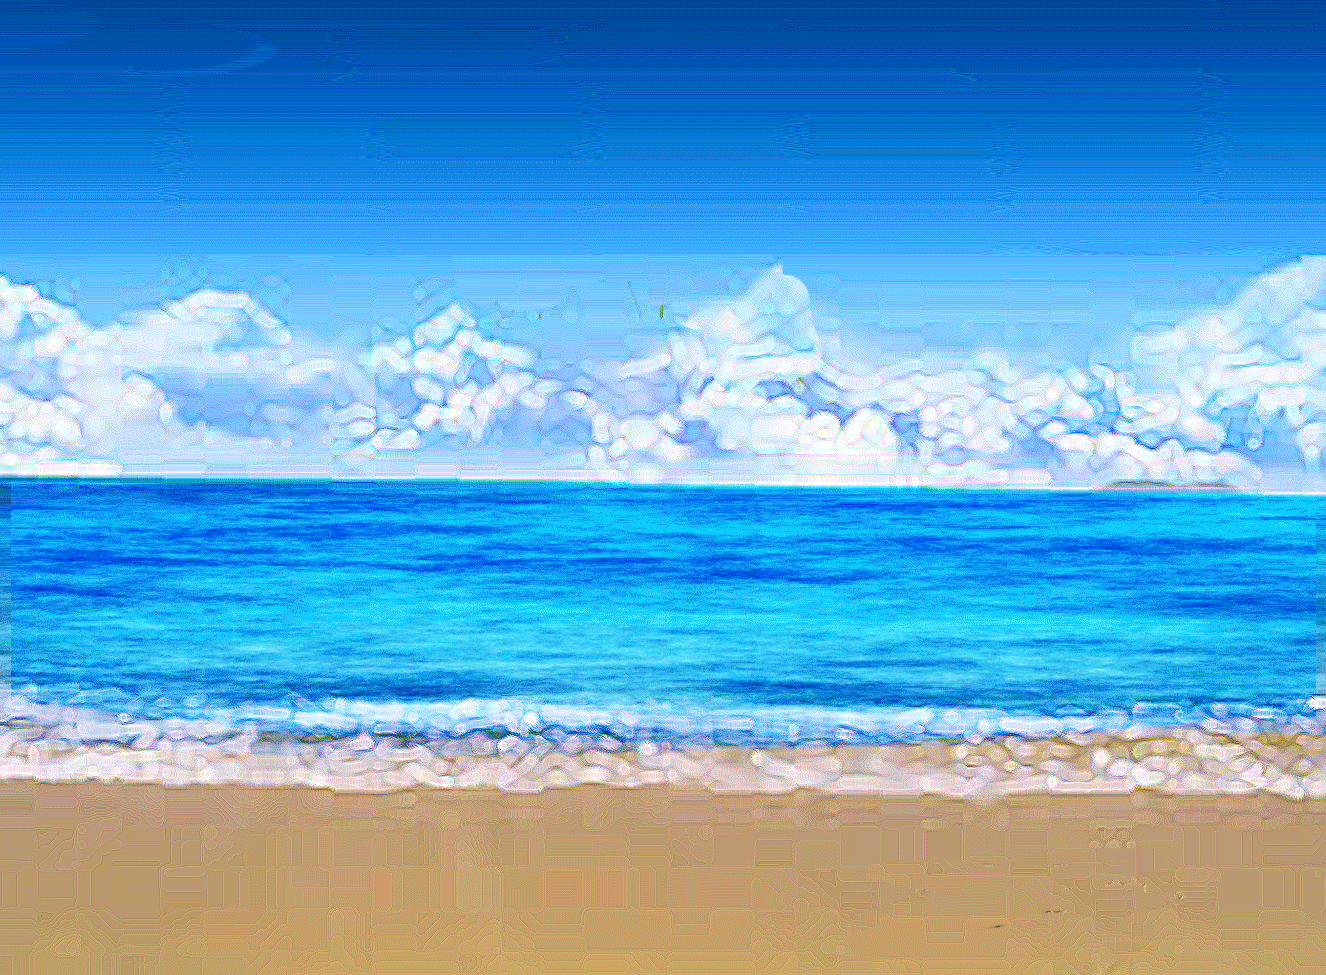 Animated Beach Waves Wallpaper - WallpaperSafari